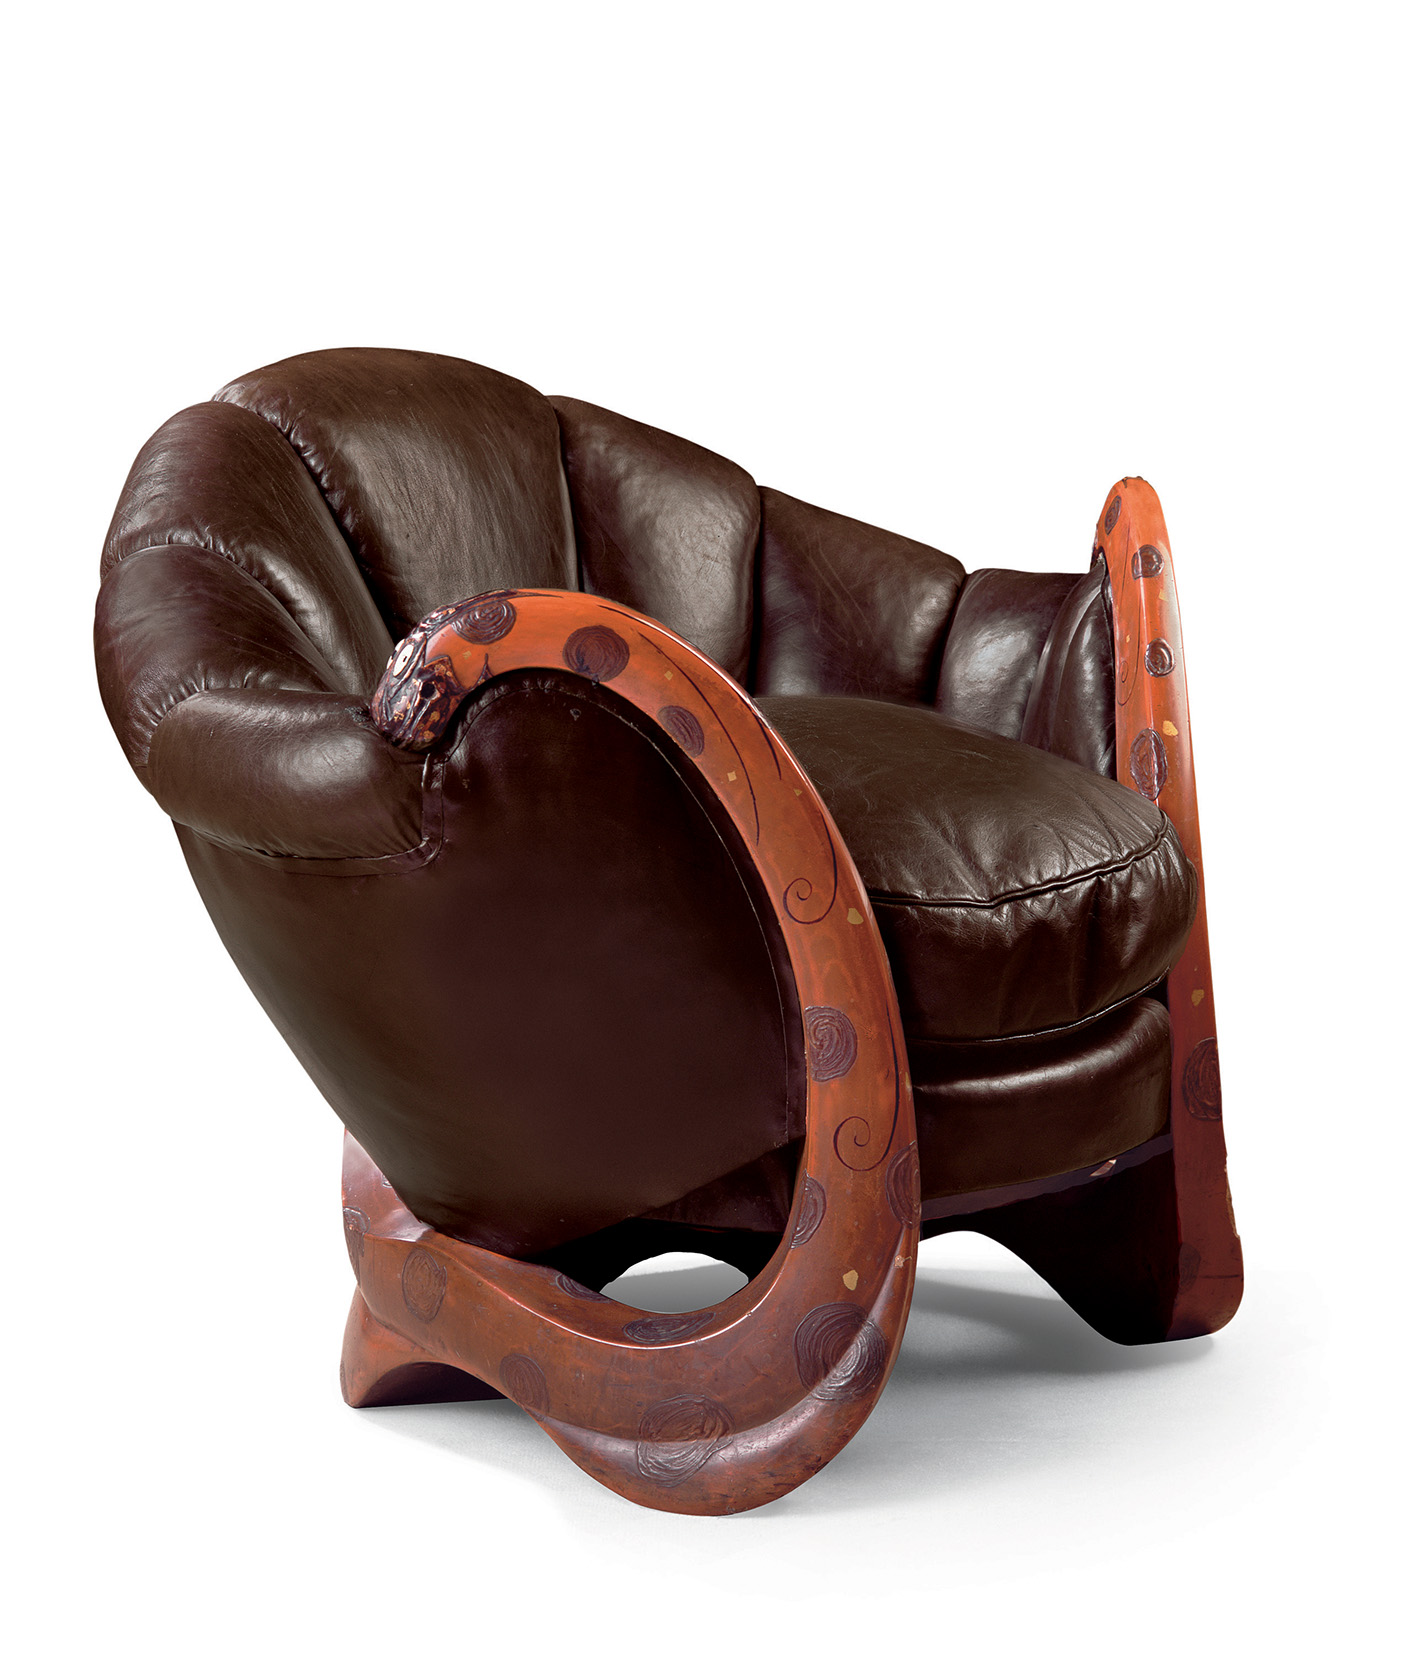 Siren Chair. © Christies images Ltd.